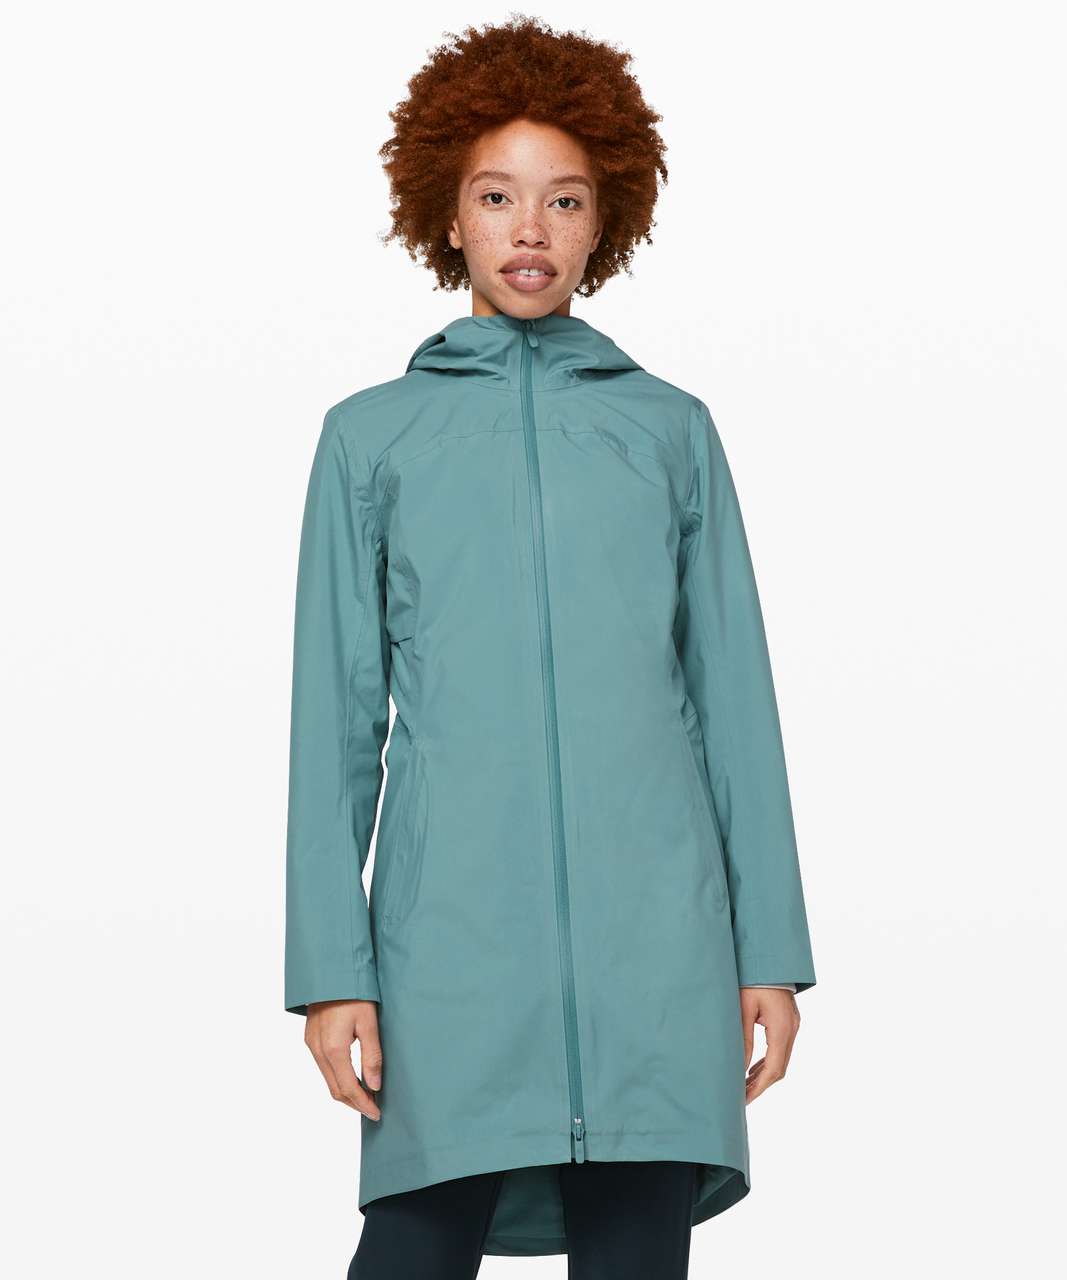 lululemon rain rebel jacket review